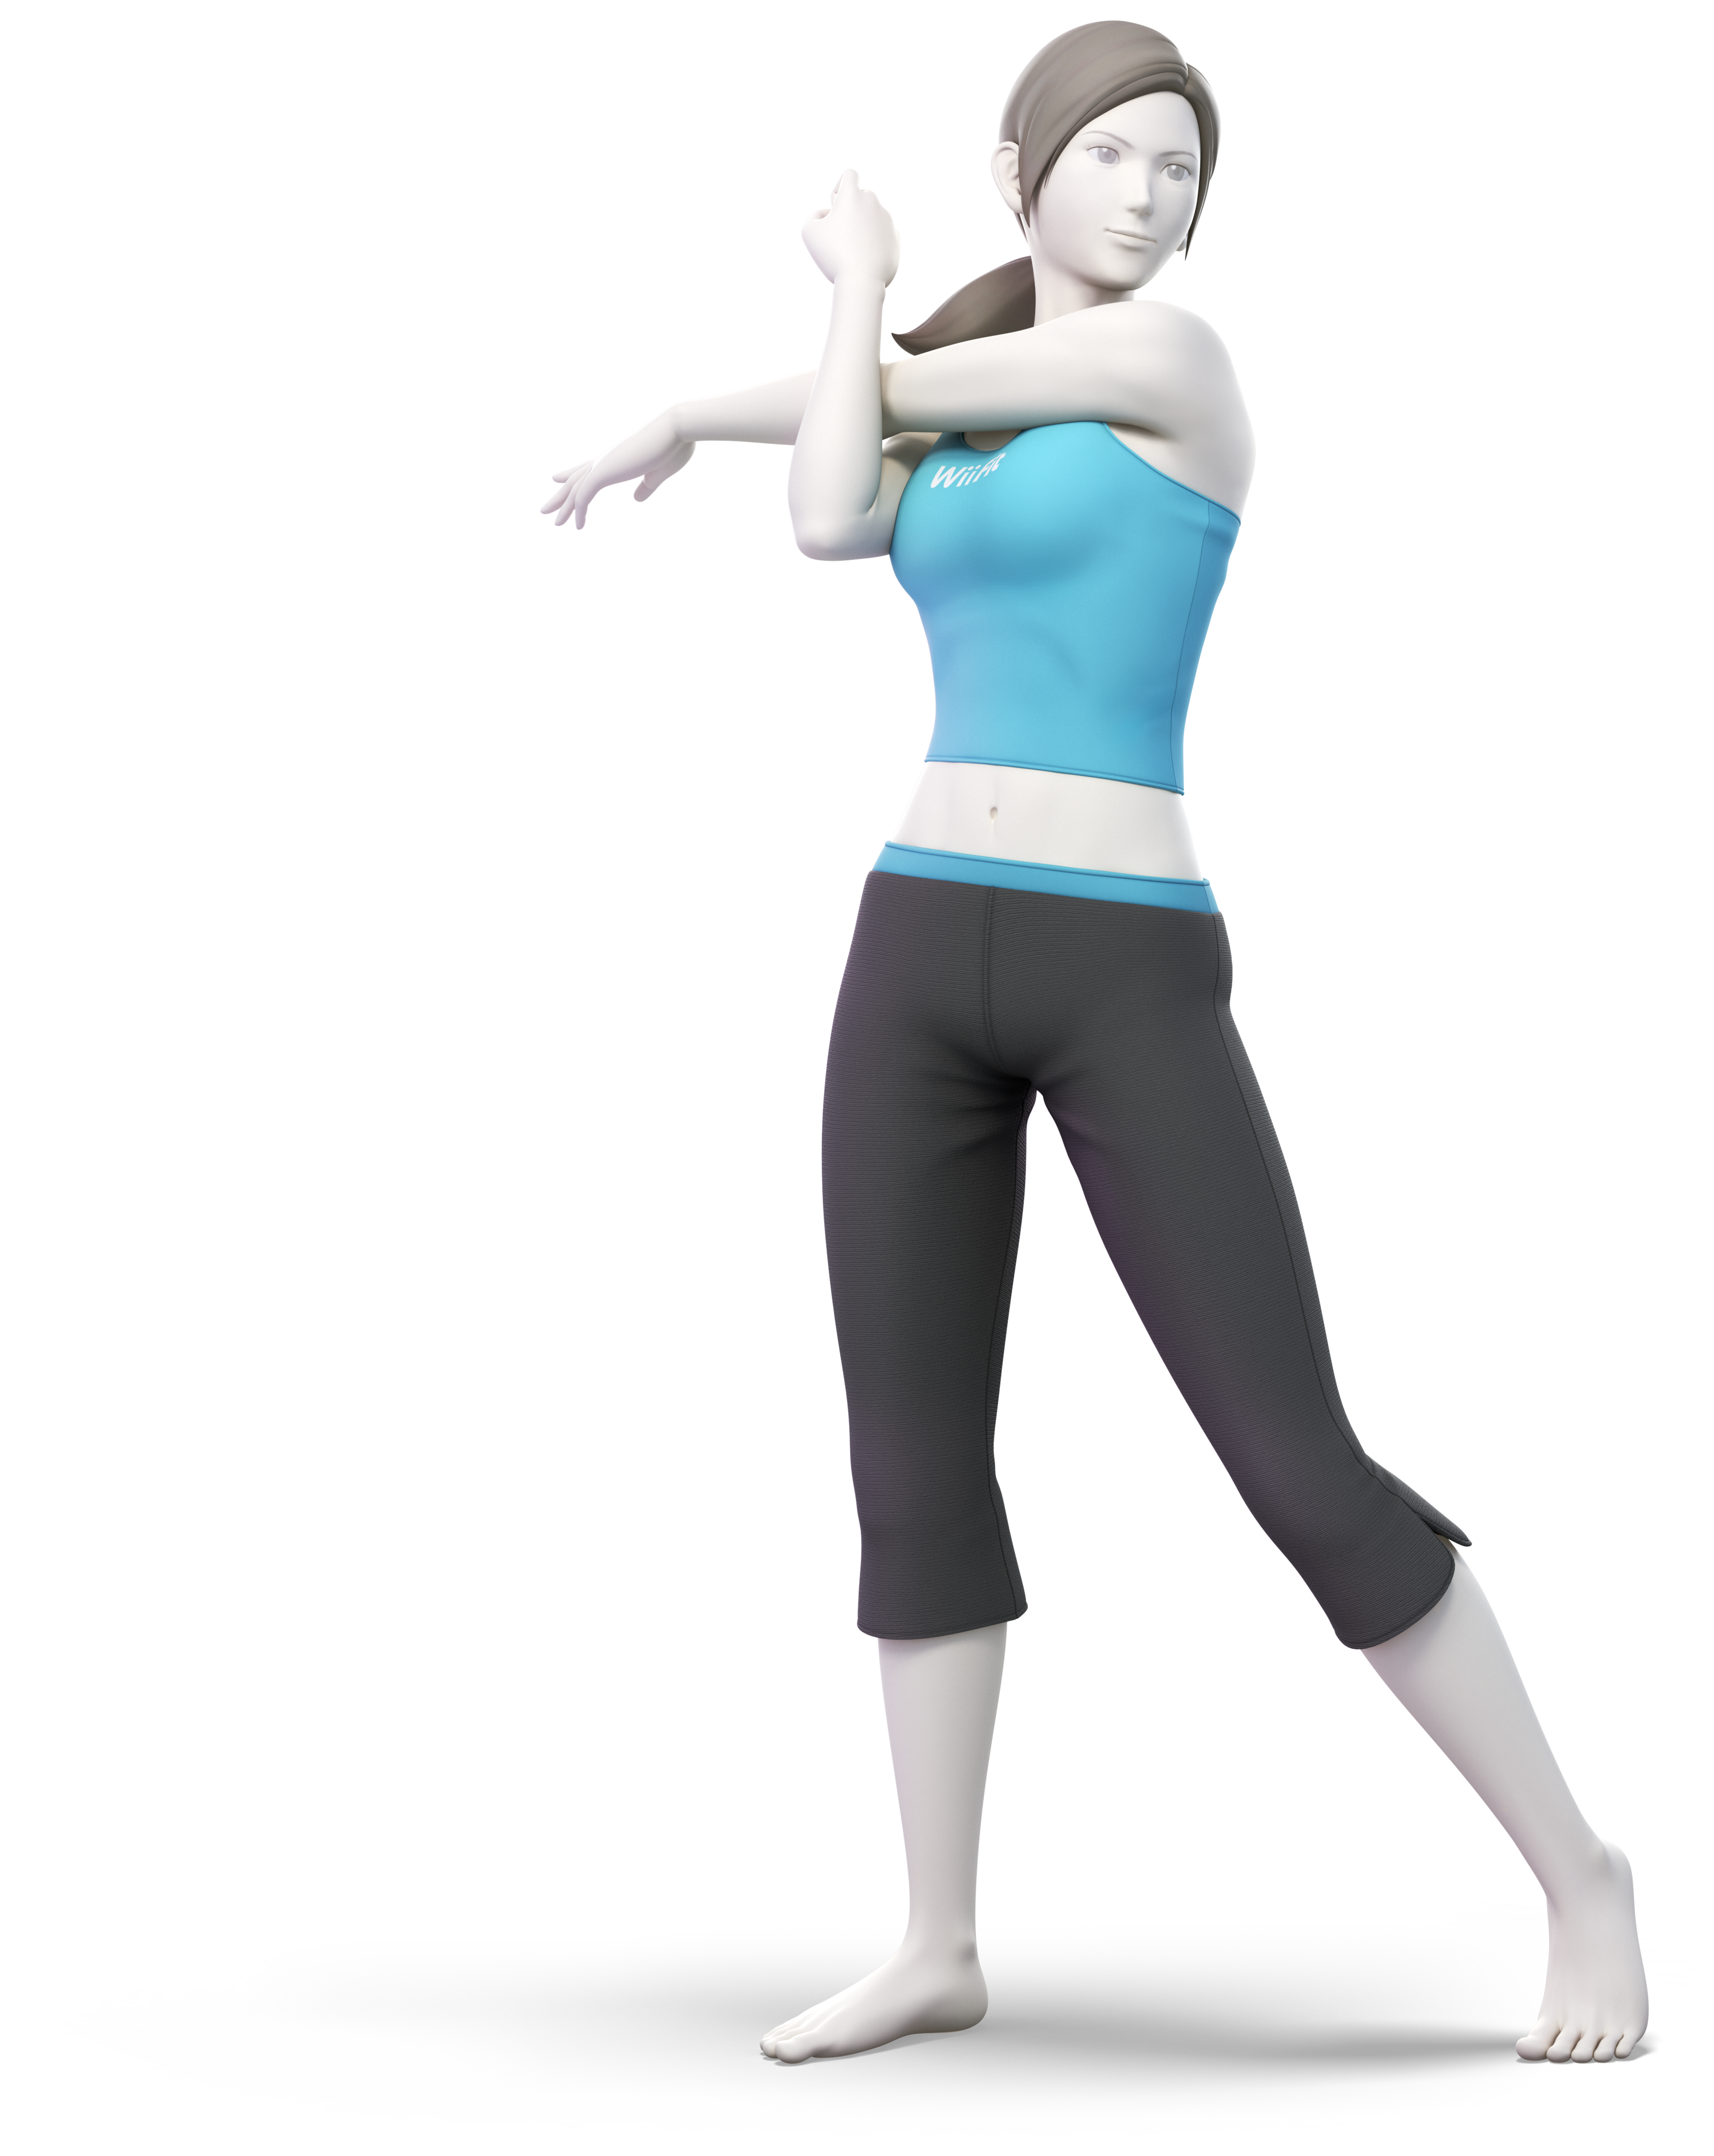 Wii Fit Trainer (Super Smash Bros. Ultimate), Smashpedia